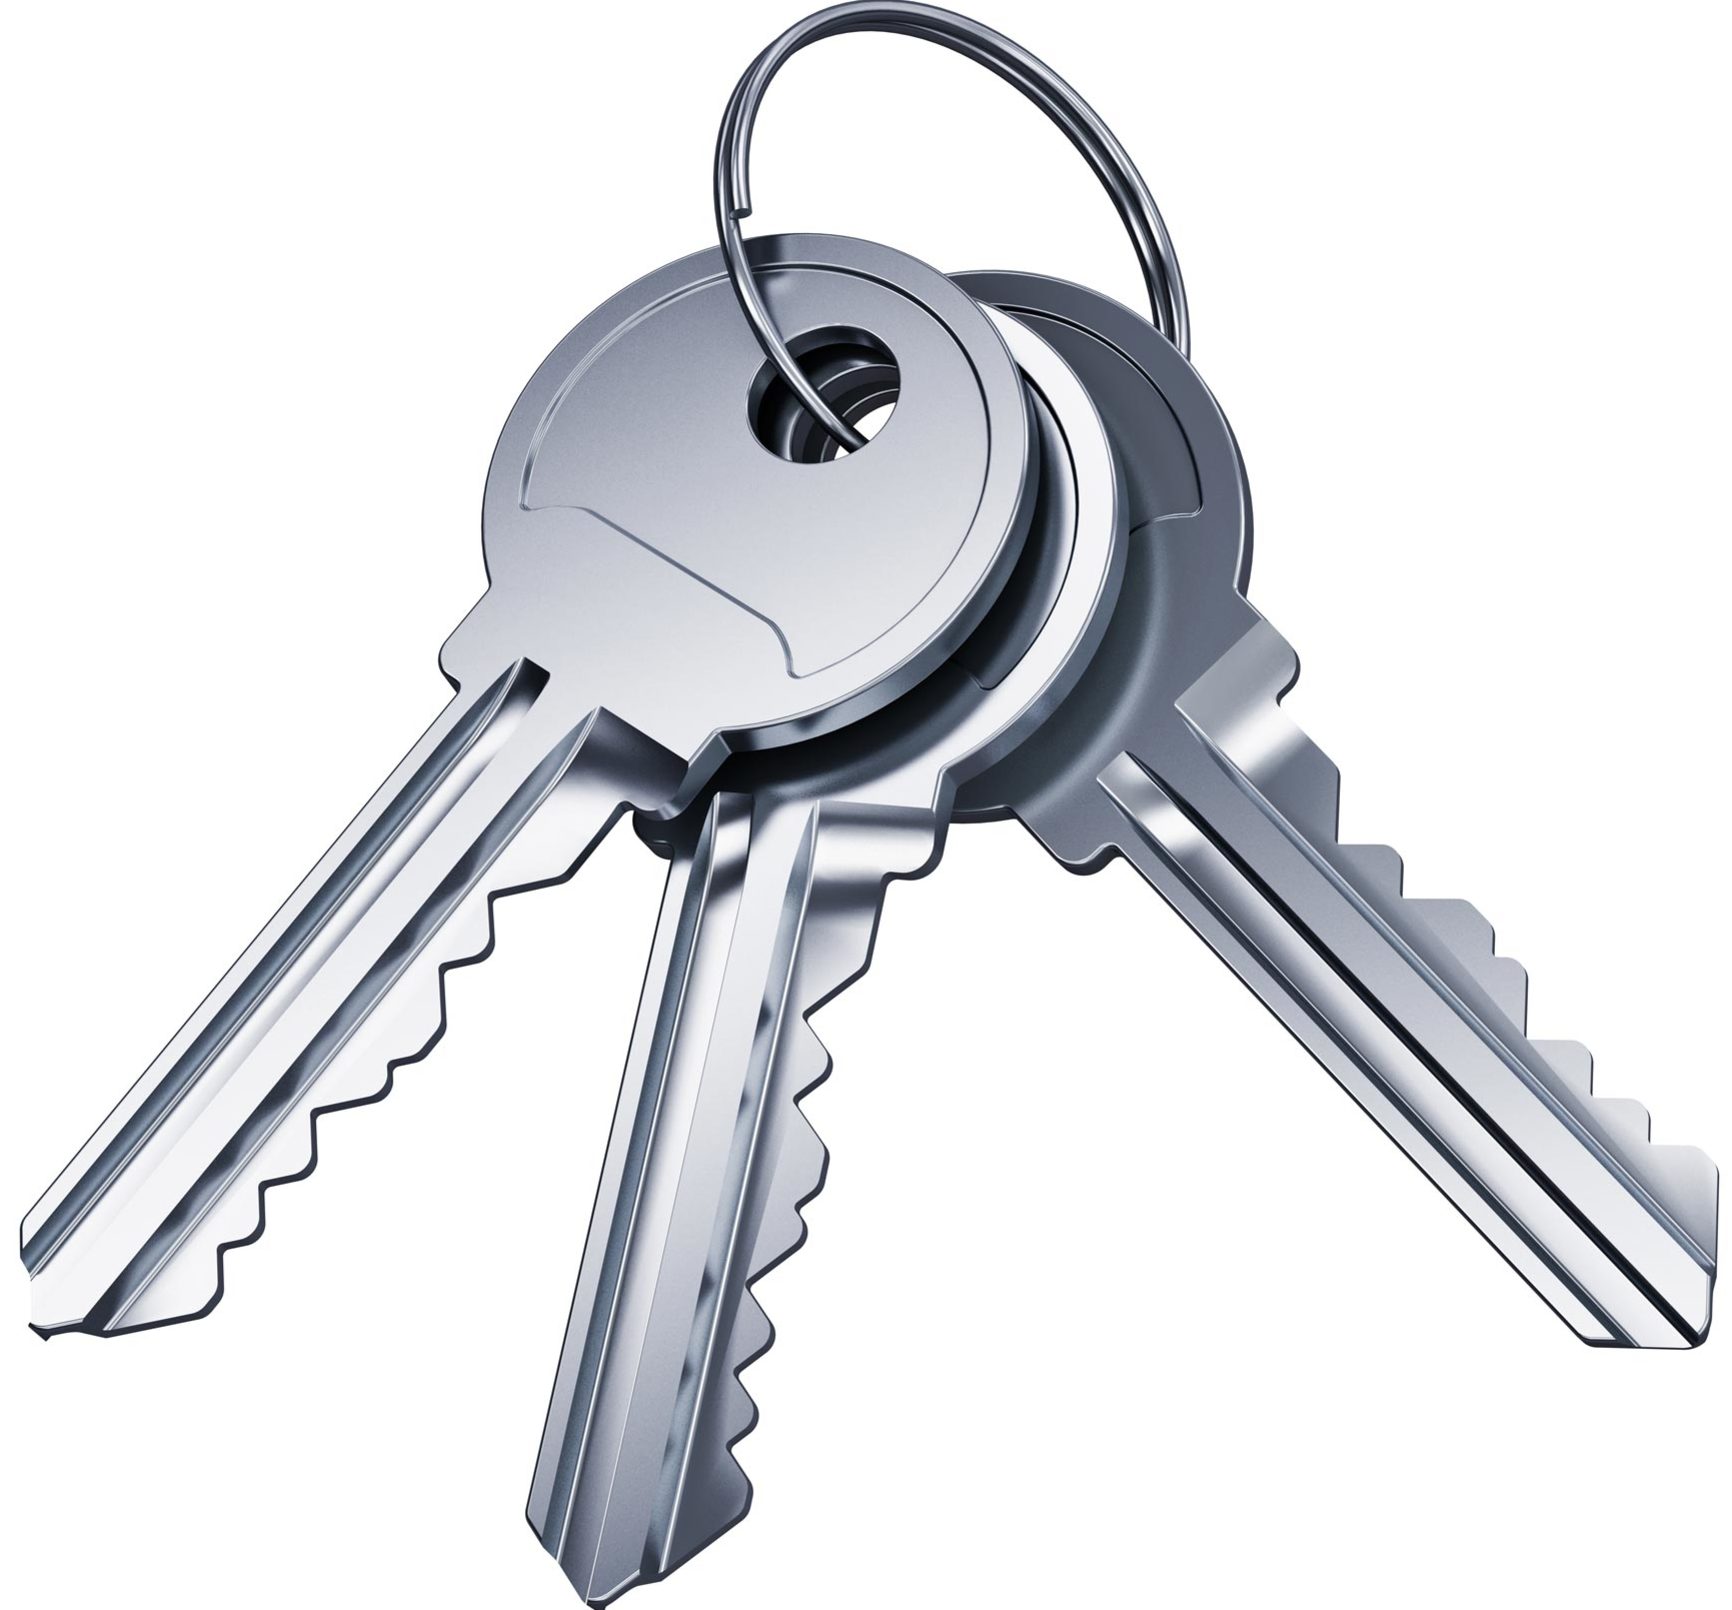 A key chain holding three keys.